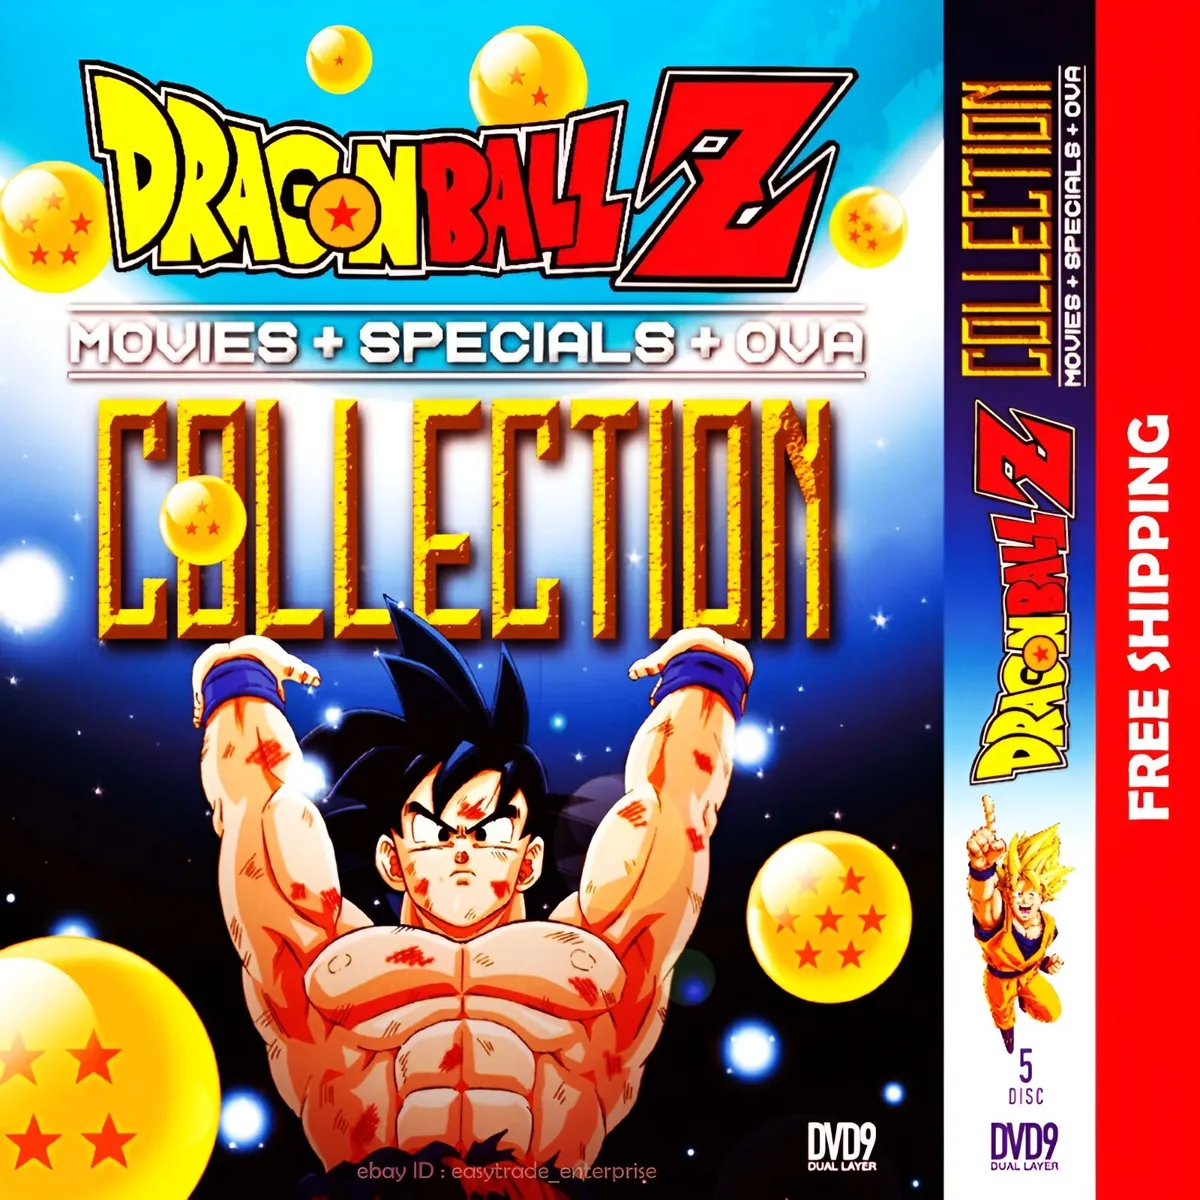 aiza mateo recommends Dragon Ball Z Dubbed